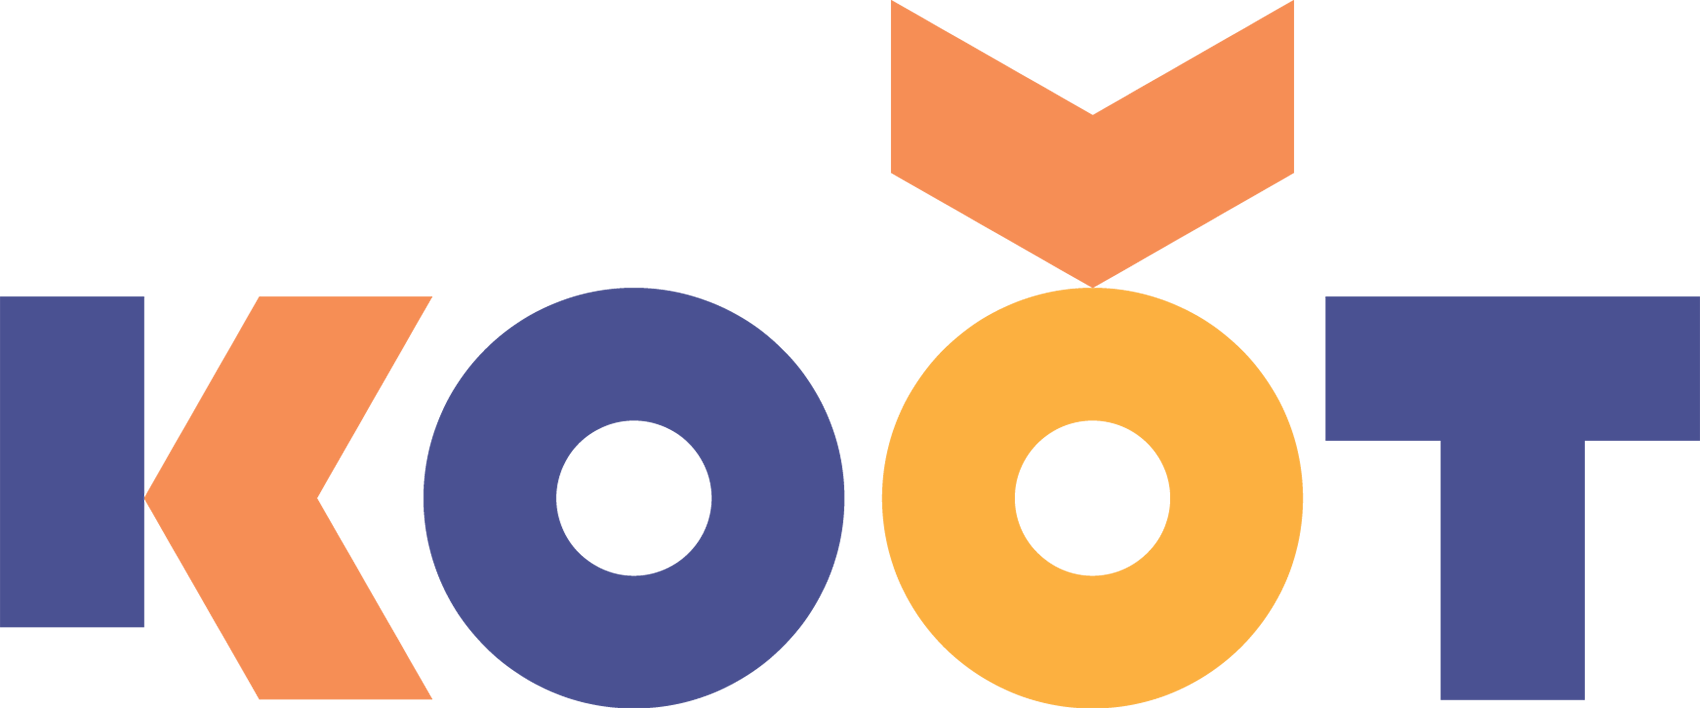 Work_and_dam-Koot_professionals-Koot-logo-01